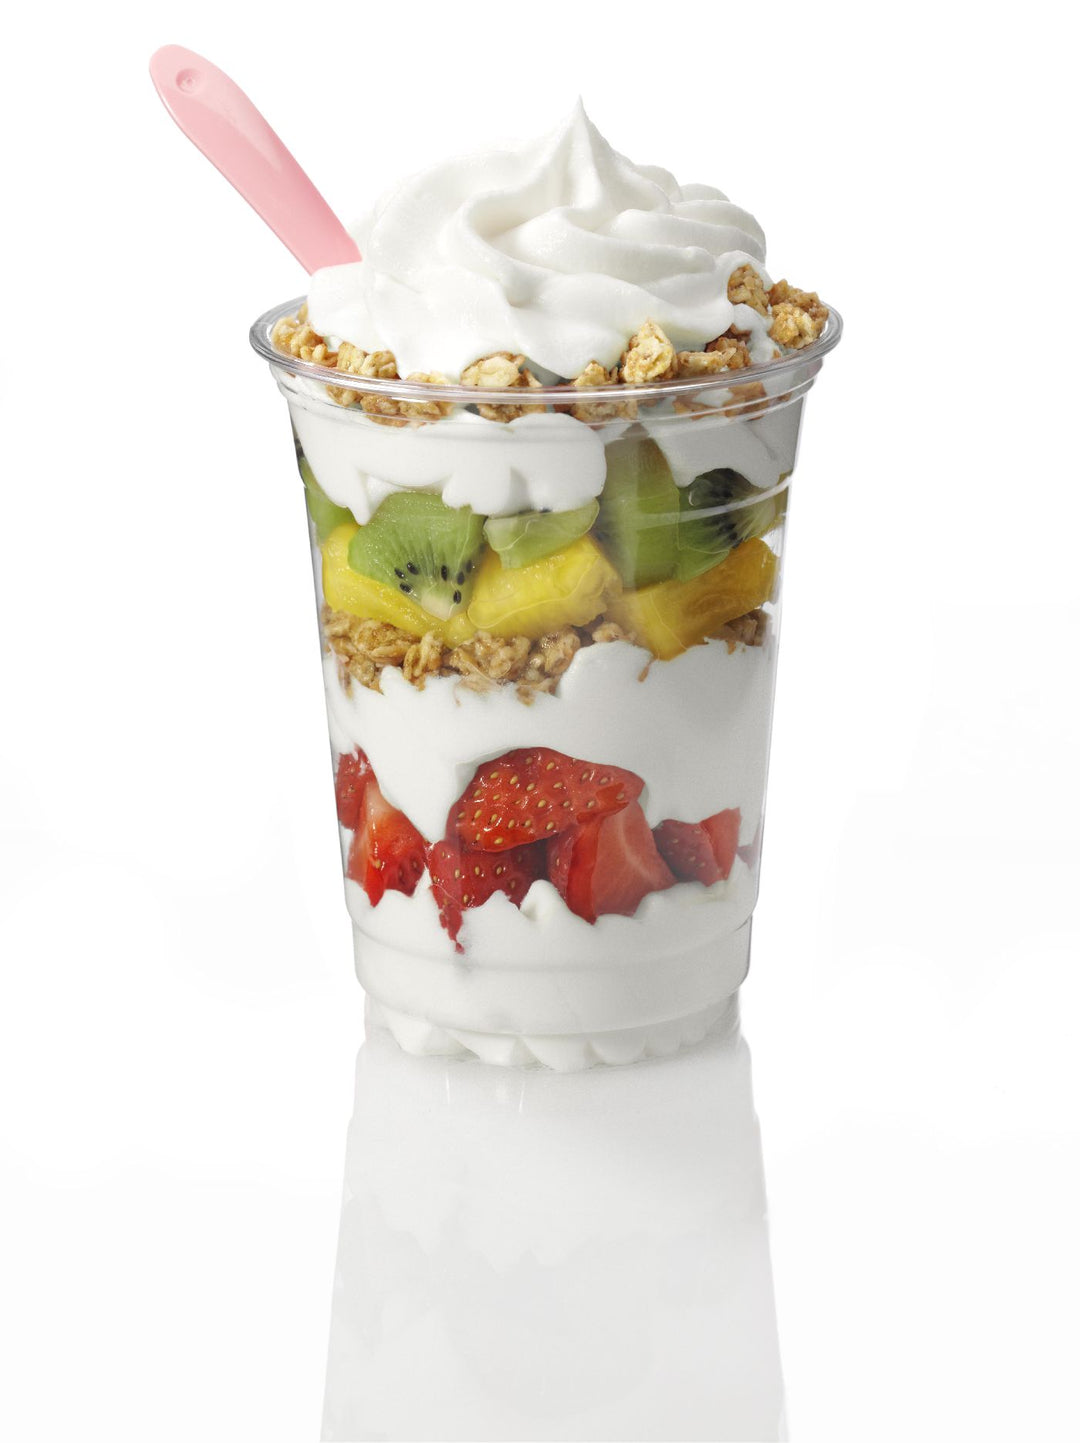 Buy Wholesale Soft-Serve Ice Cream Machines, Frozen Yogurt Machines in Canada